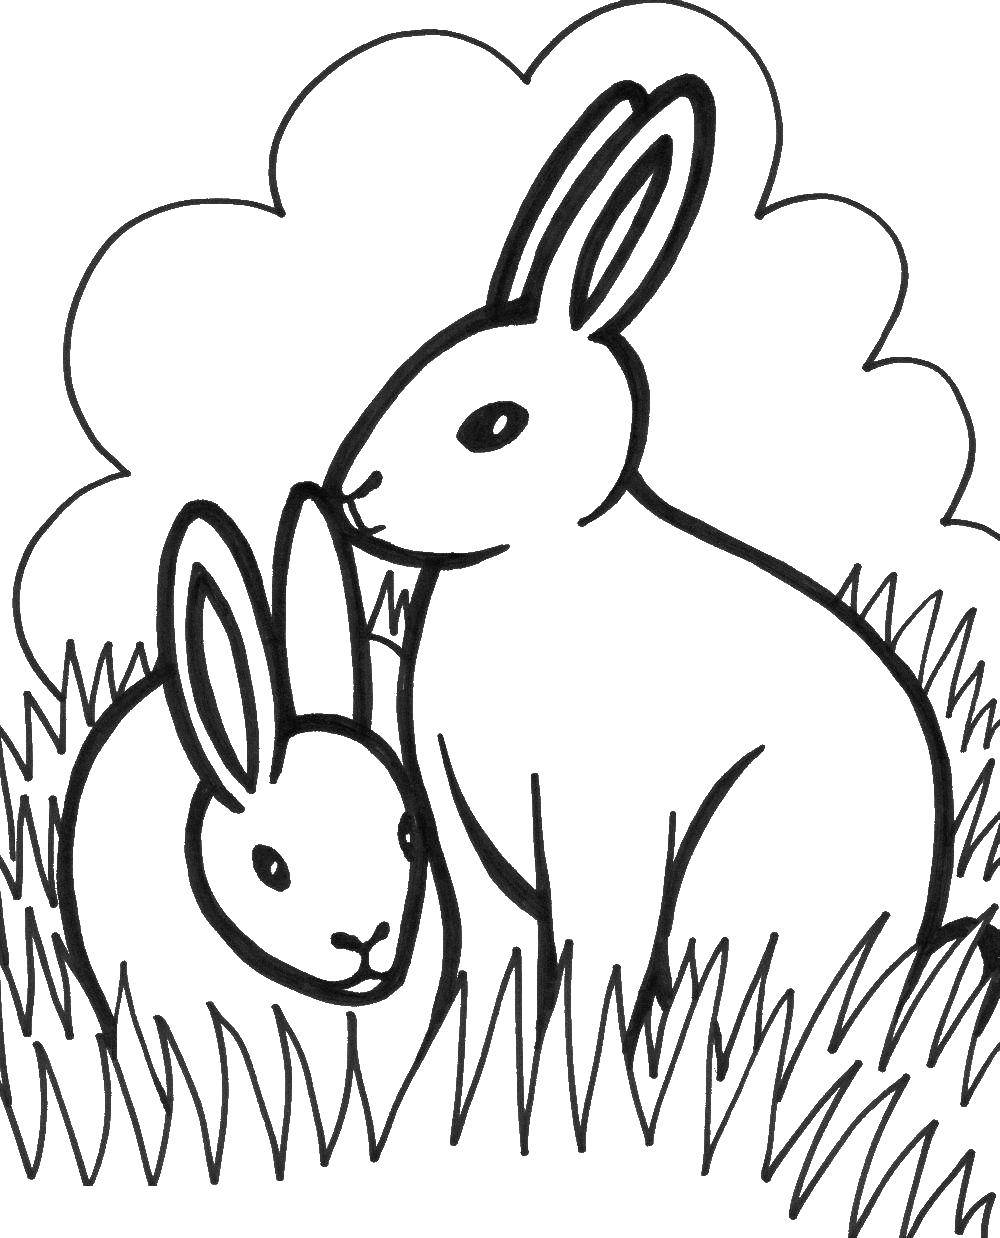 Название: Раскраска Зайчишки в траве. Категория: животные. Теги: Животные, зайчик.